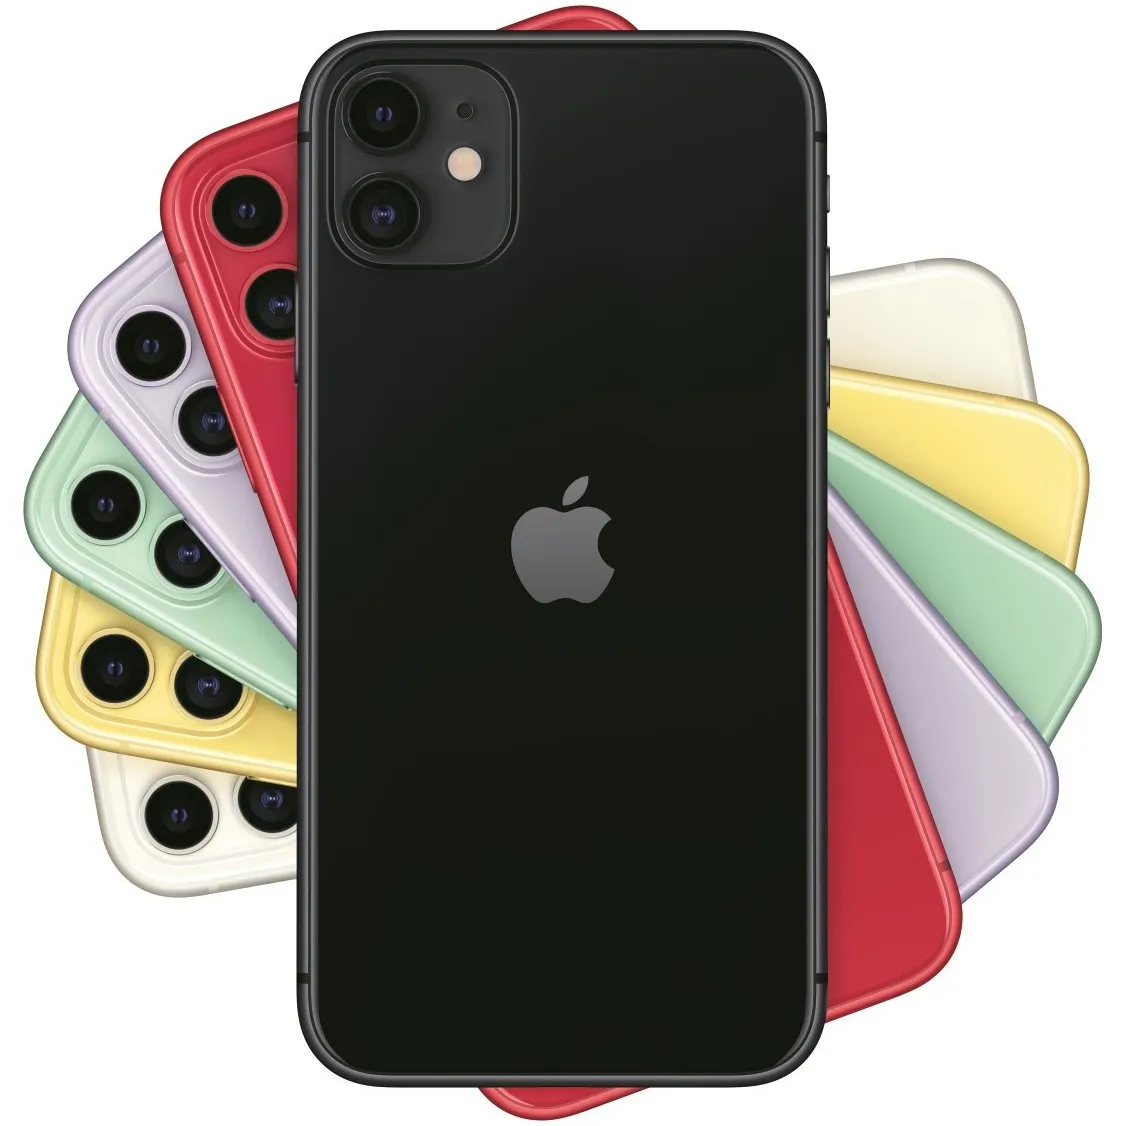 Apple iPhone 11 64GB (USB-C versie) Zwart